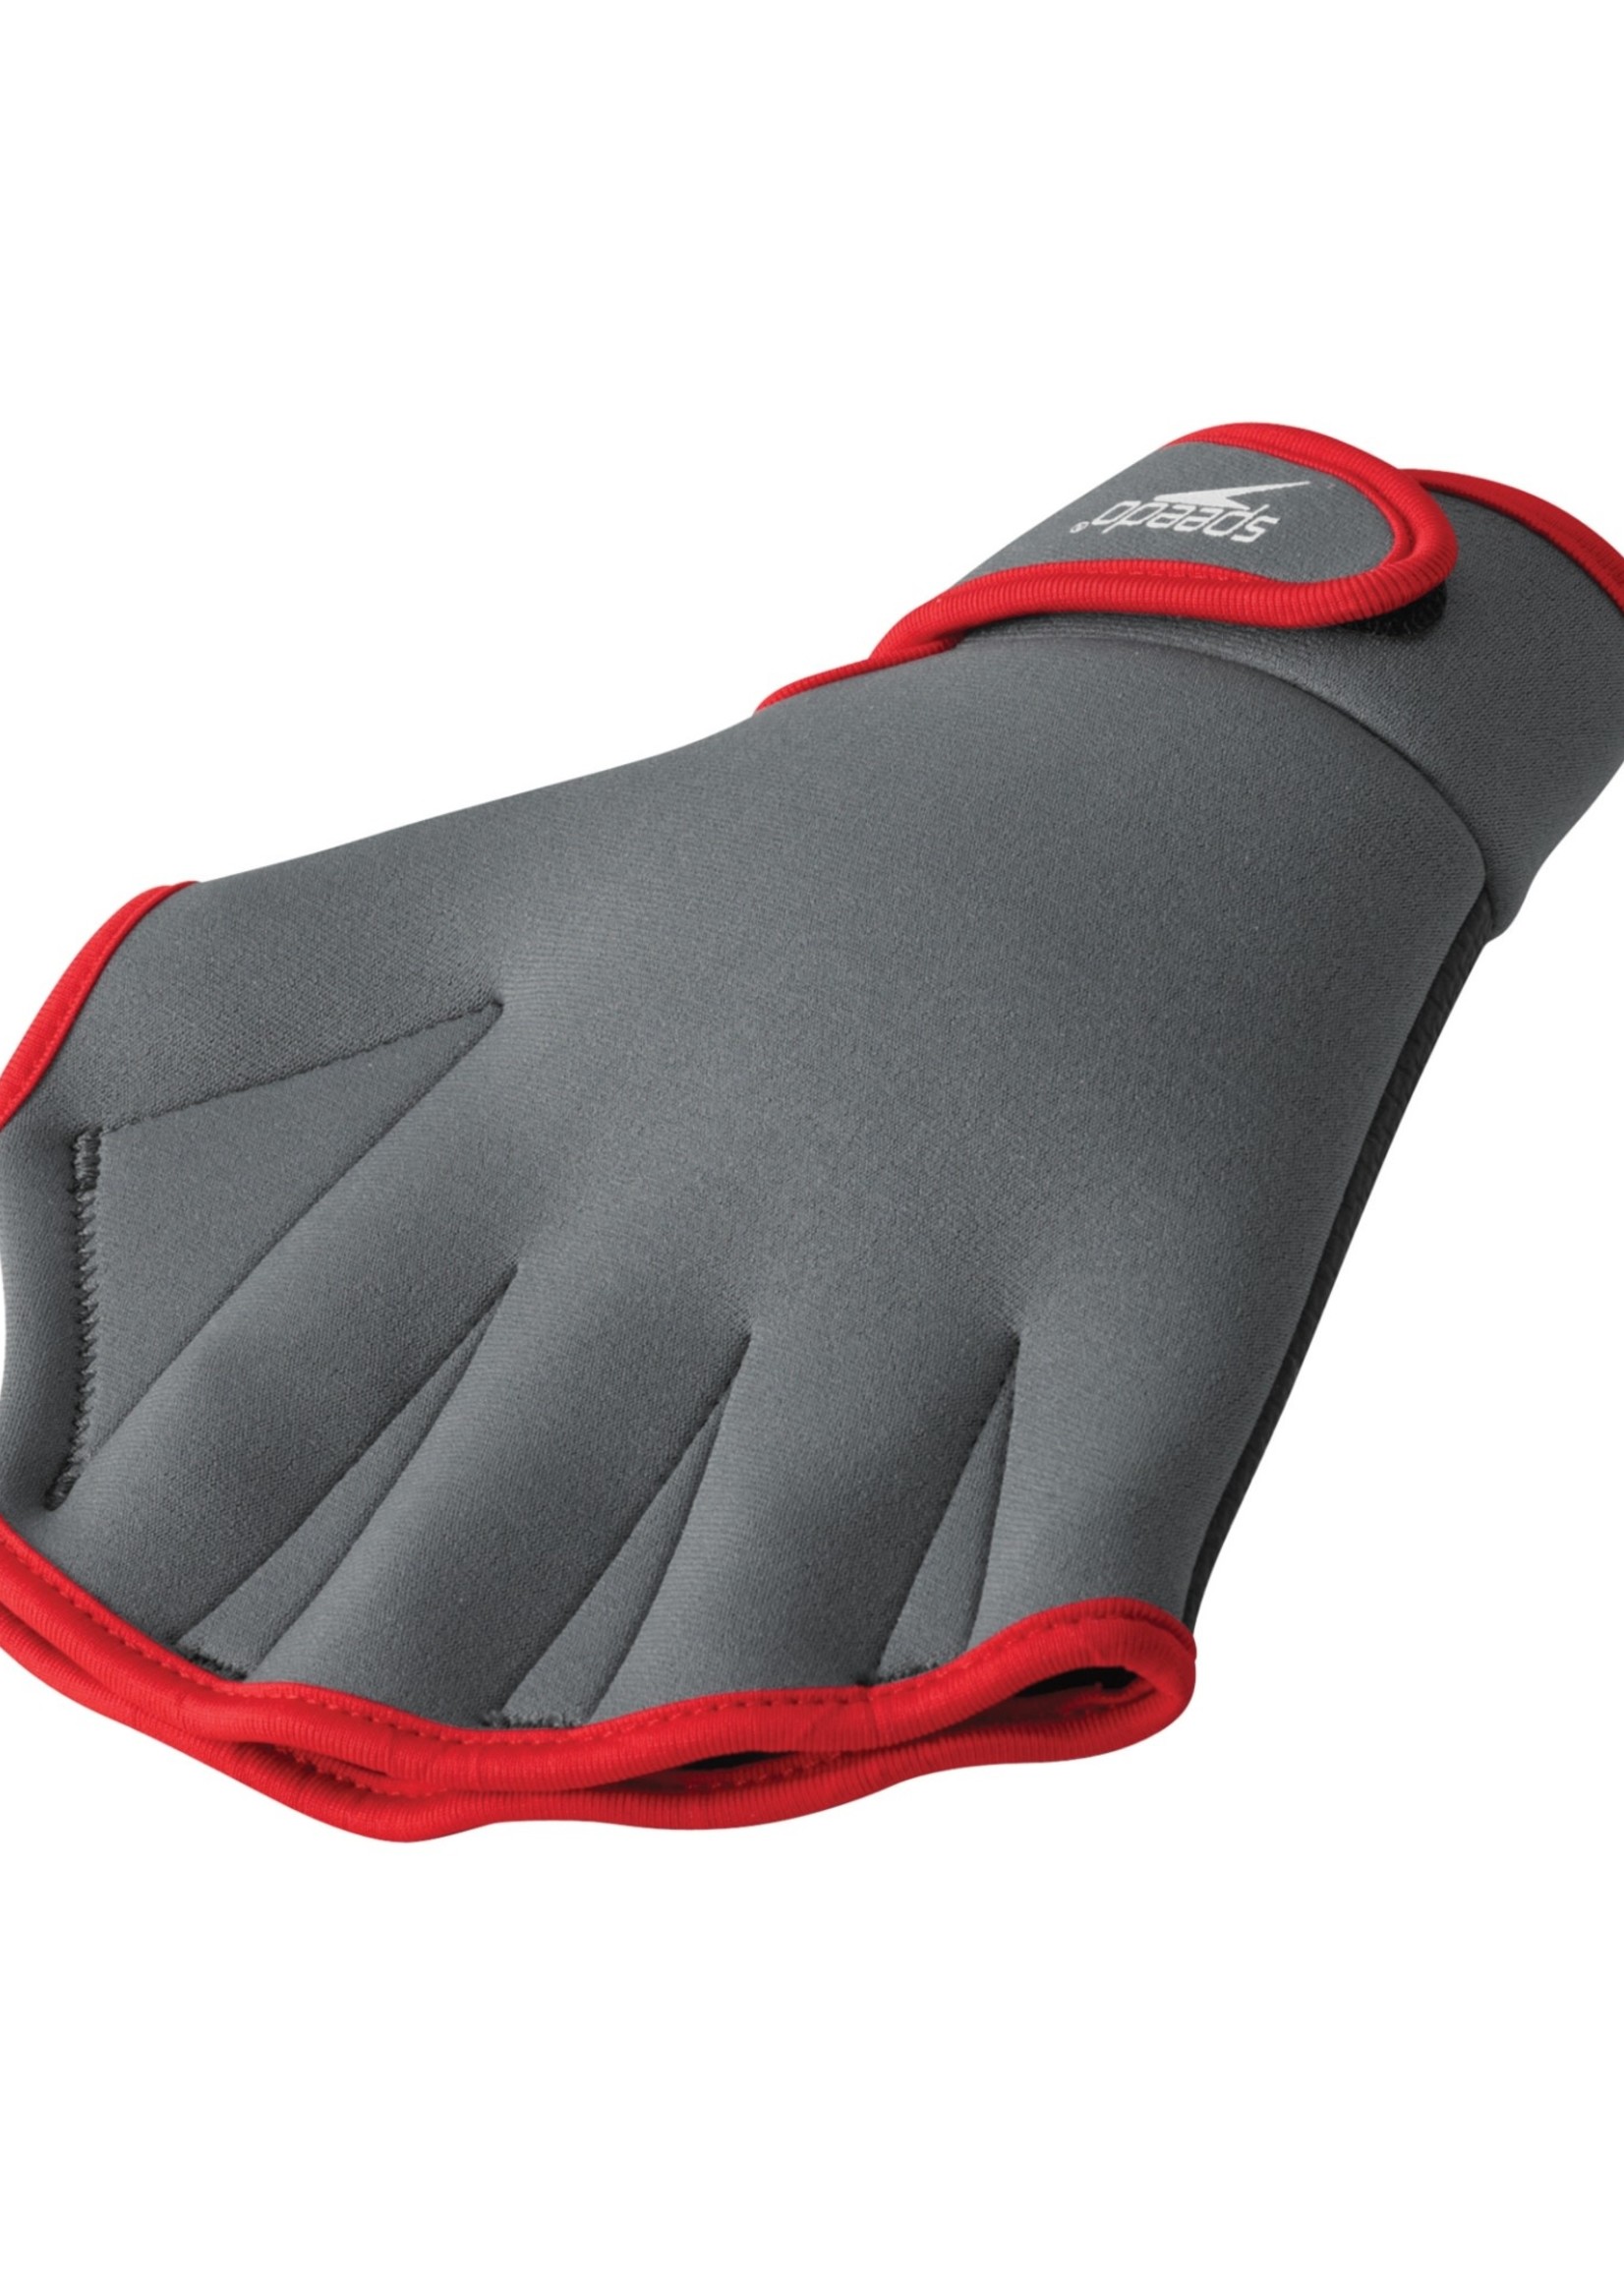 Aquatic Fitness Gloves